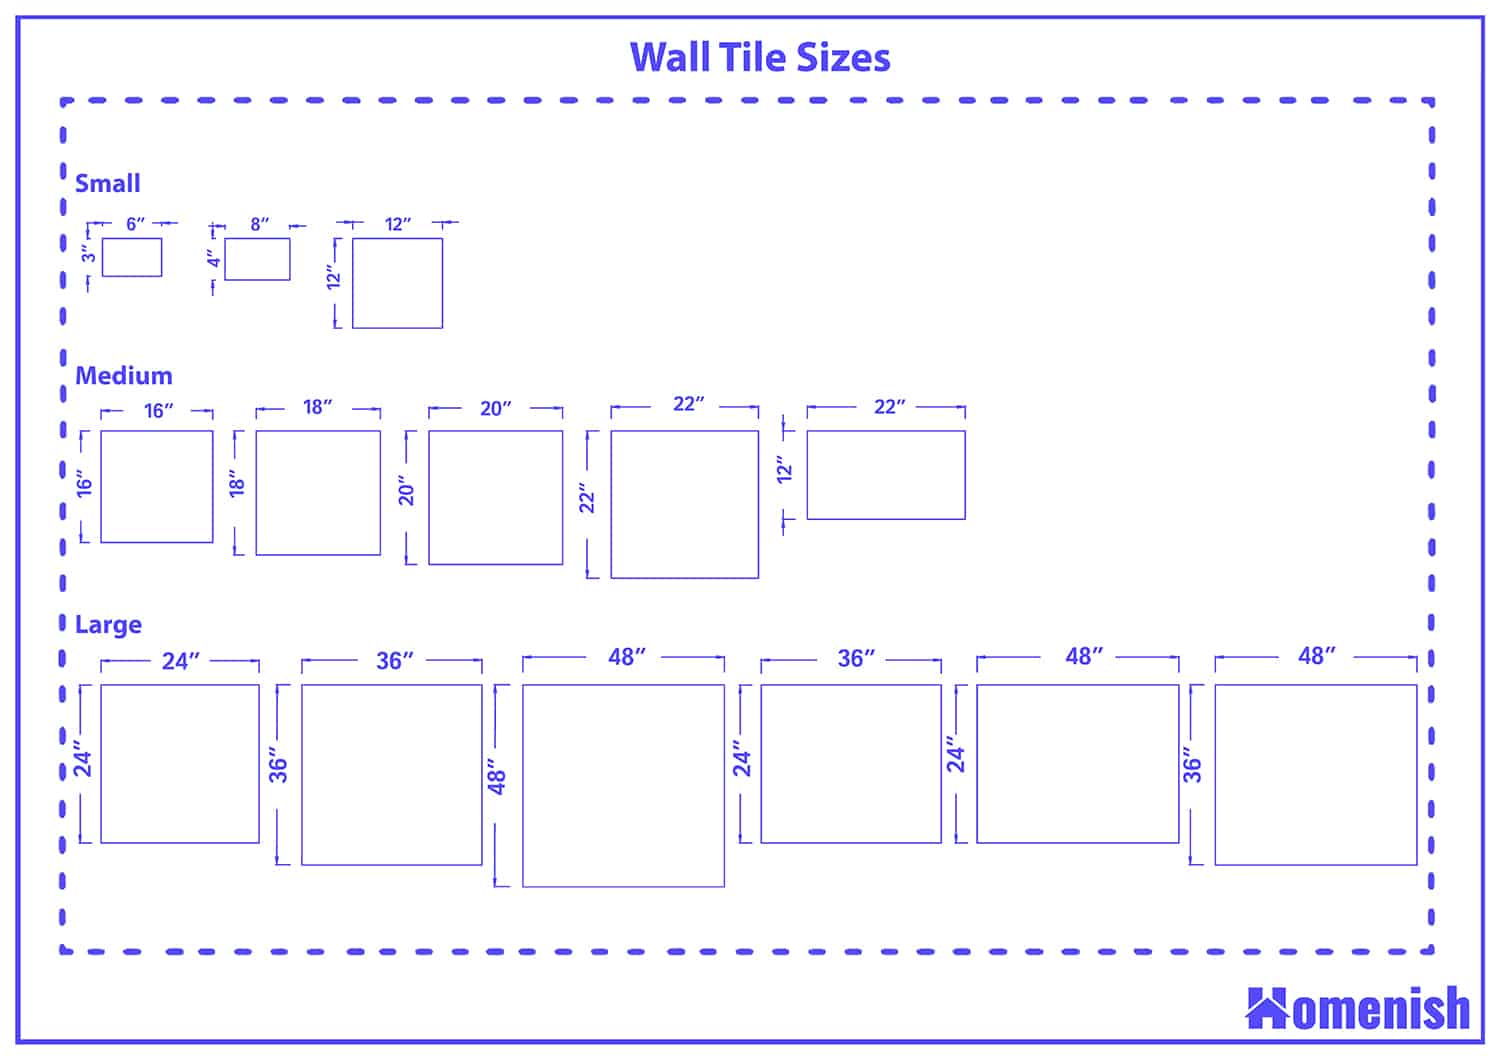 Wall tiles sizes